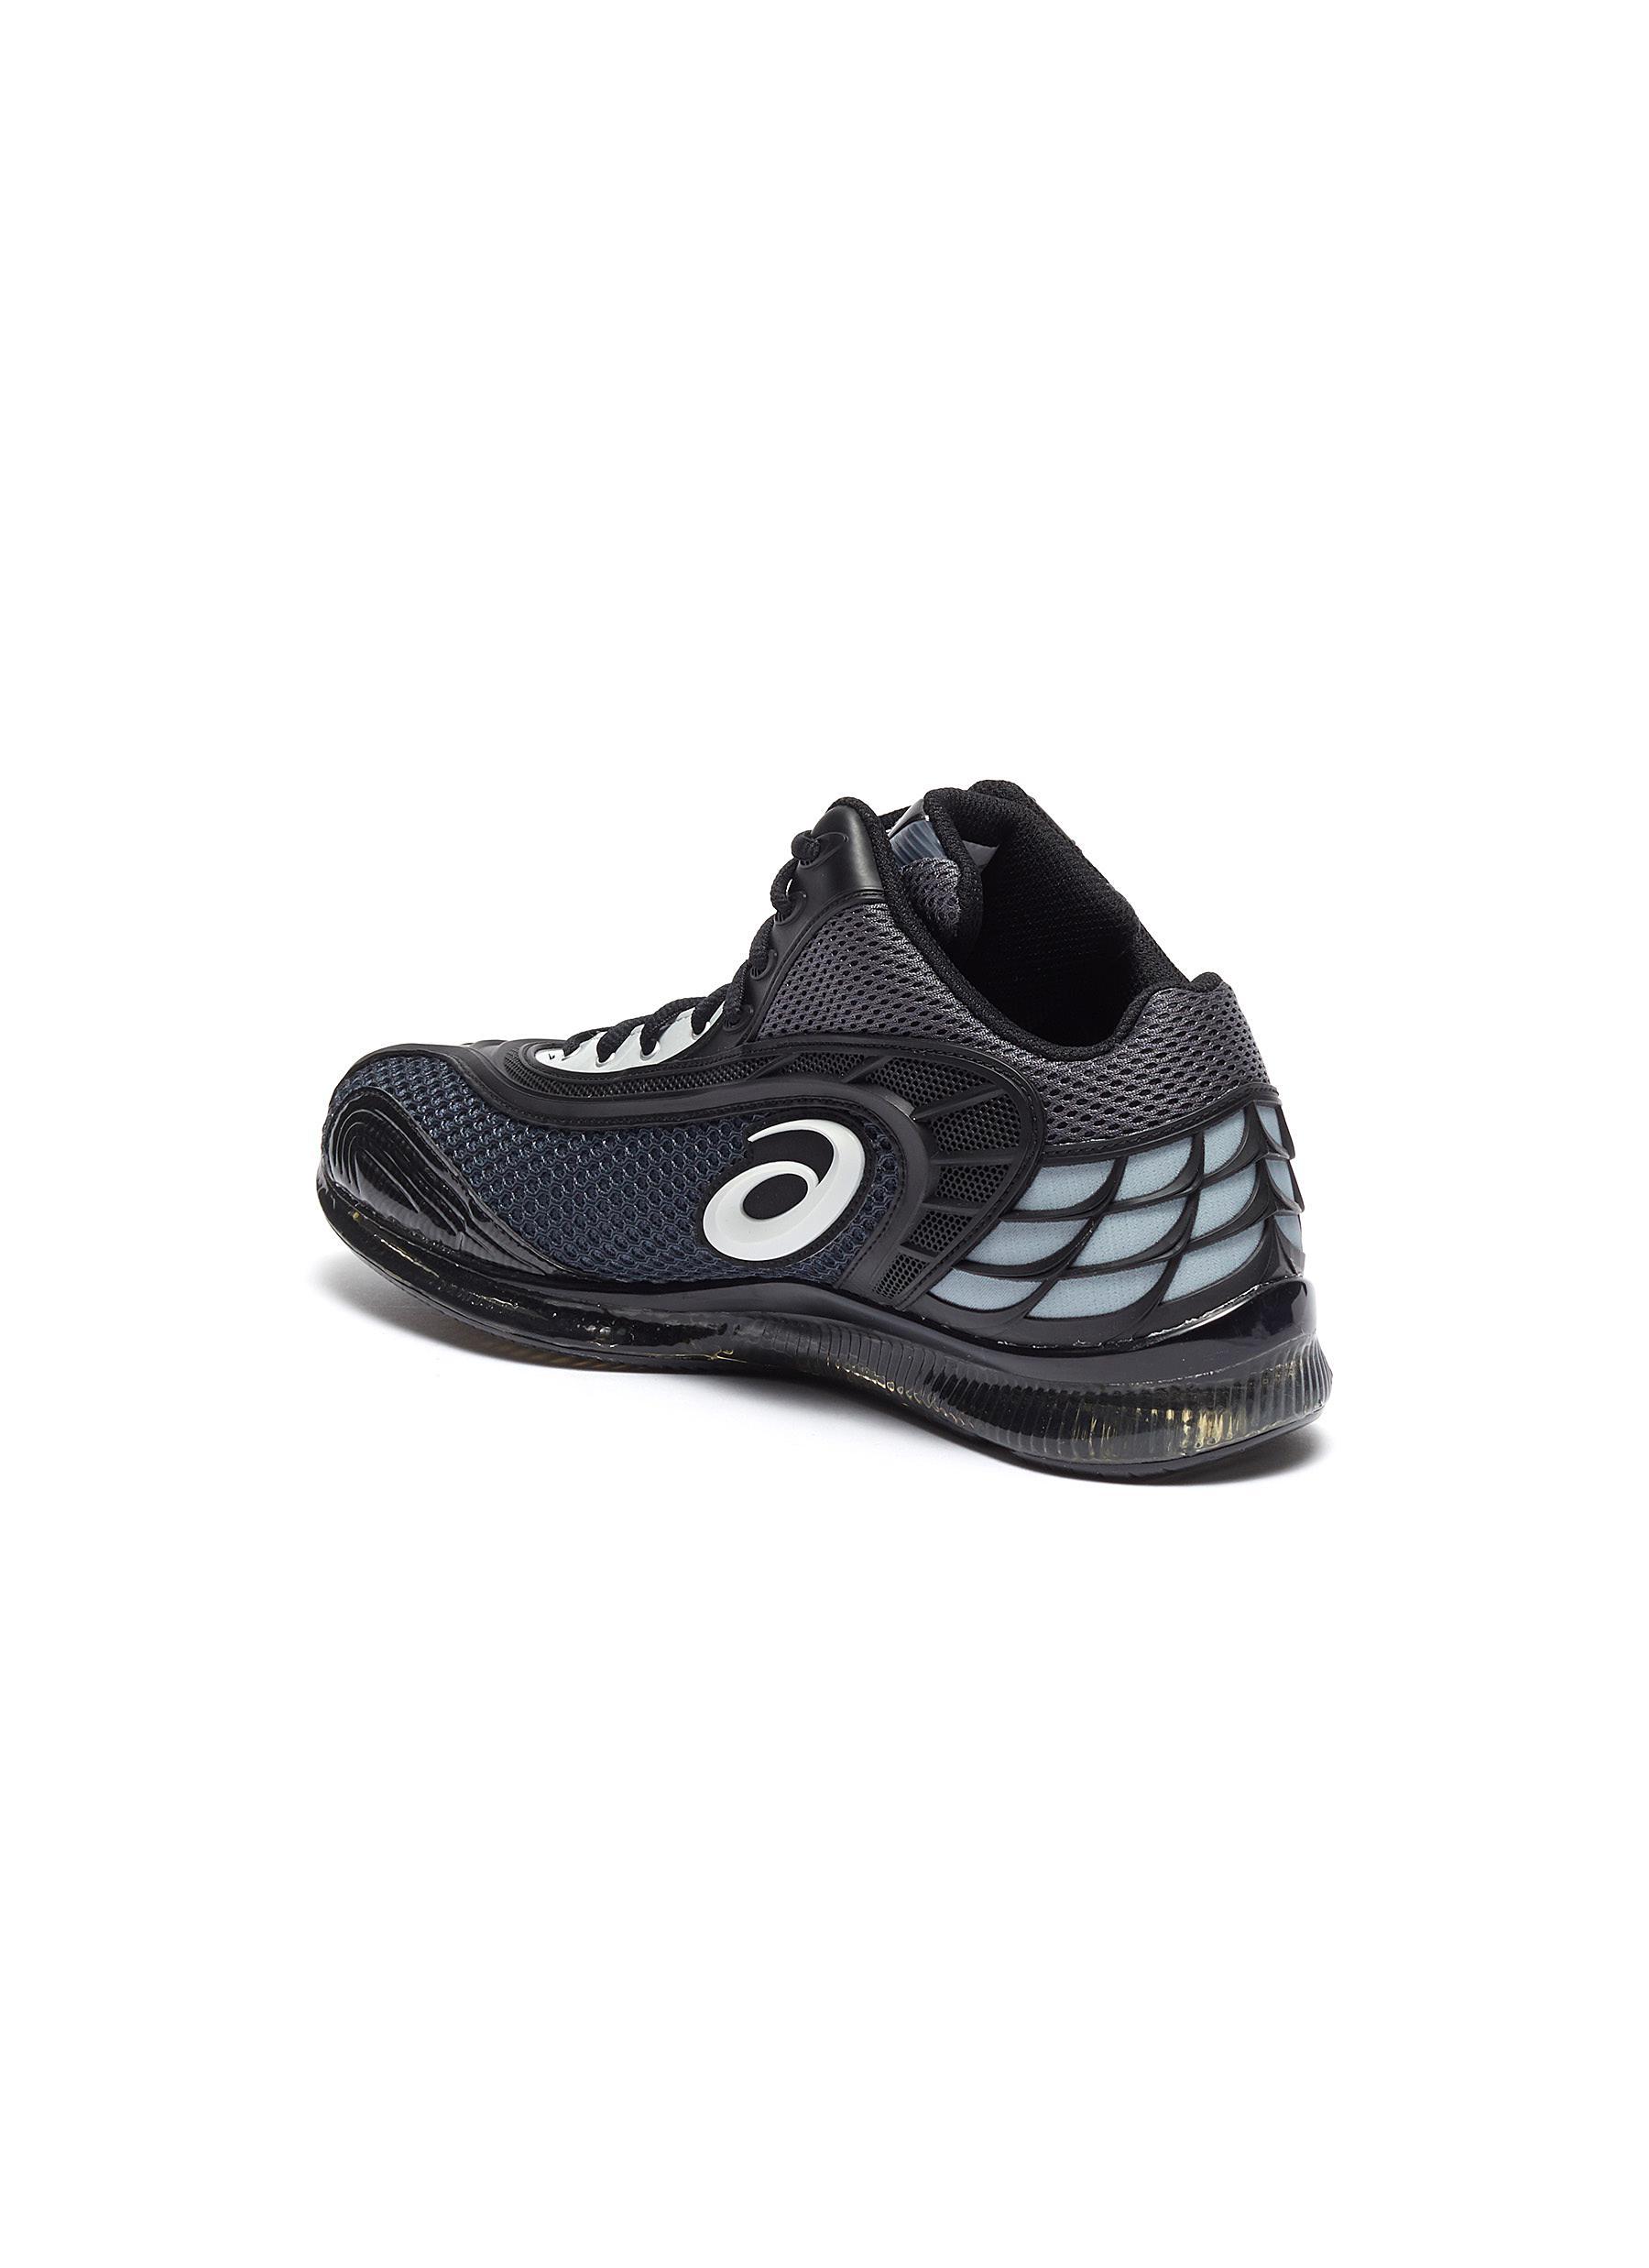 Kiko Kostadinov X Asics 'gel-sokat Infinity 2' Sneakers for Men | Lyst